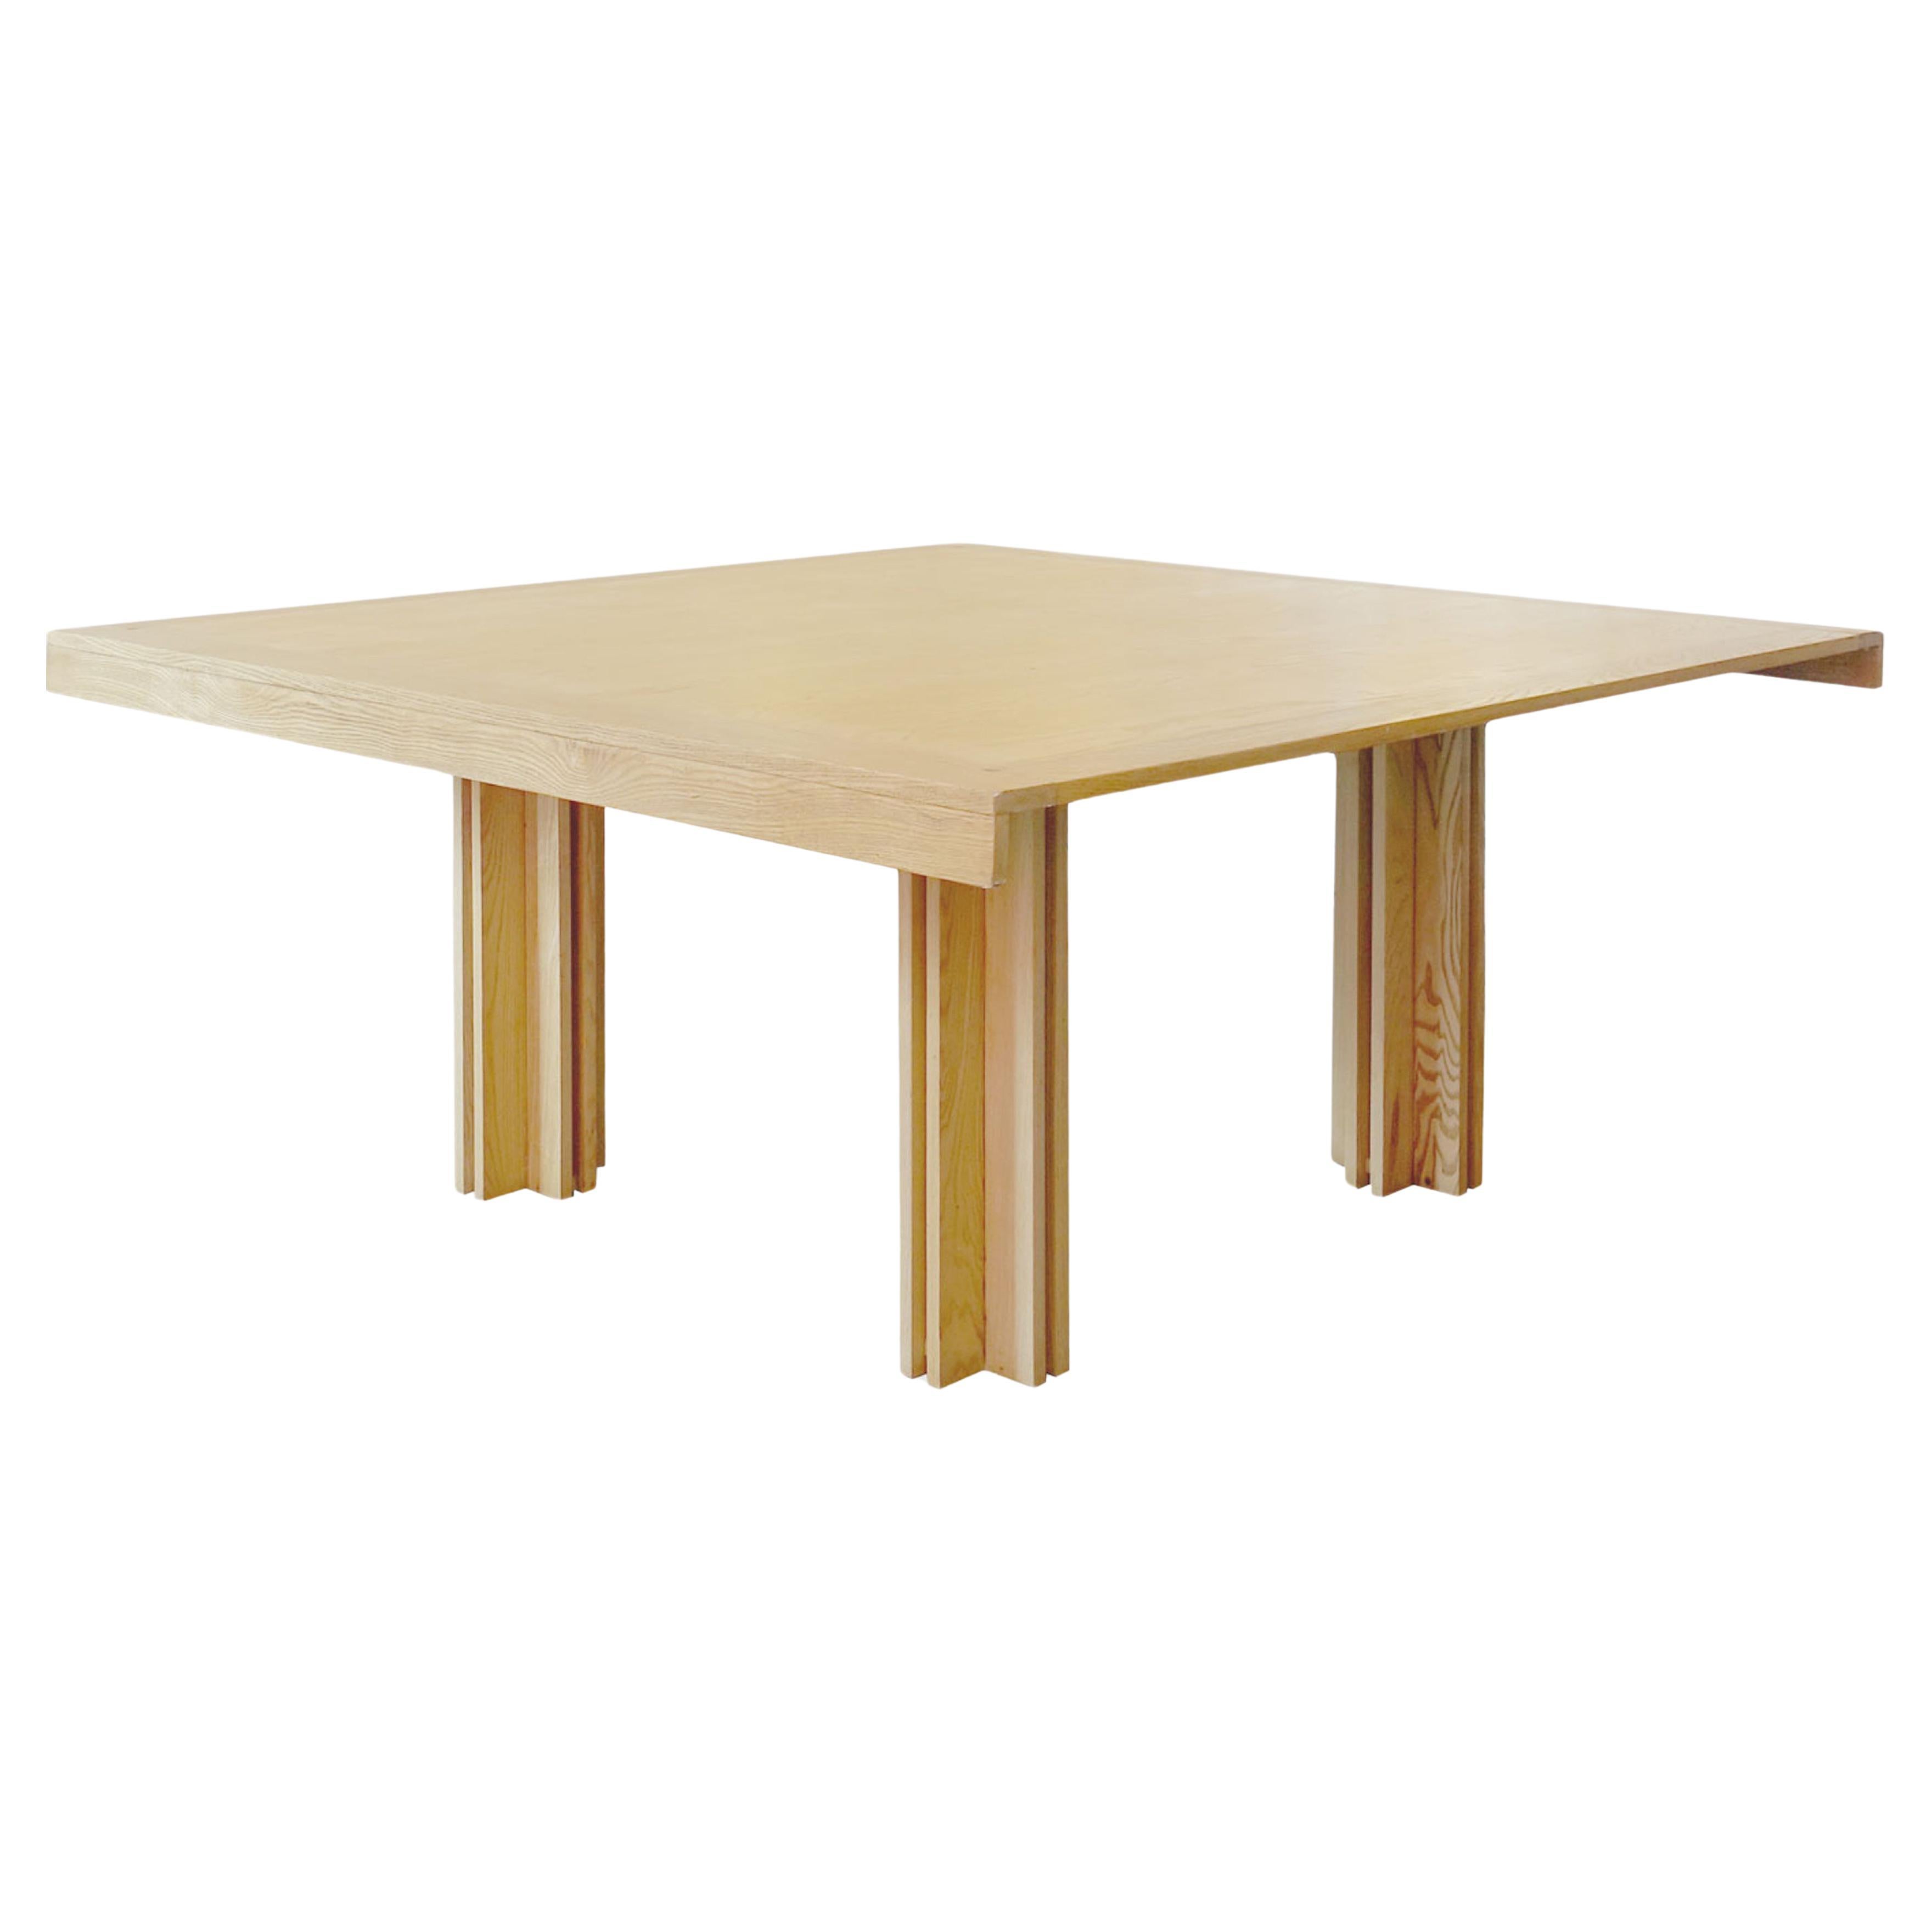 Quatour Wooden Table by Carlo Scarpa for Gavina, Italy 1973